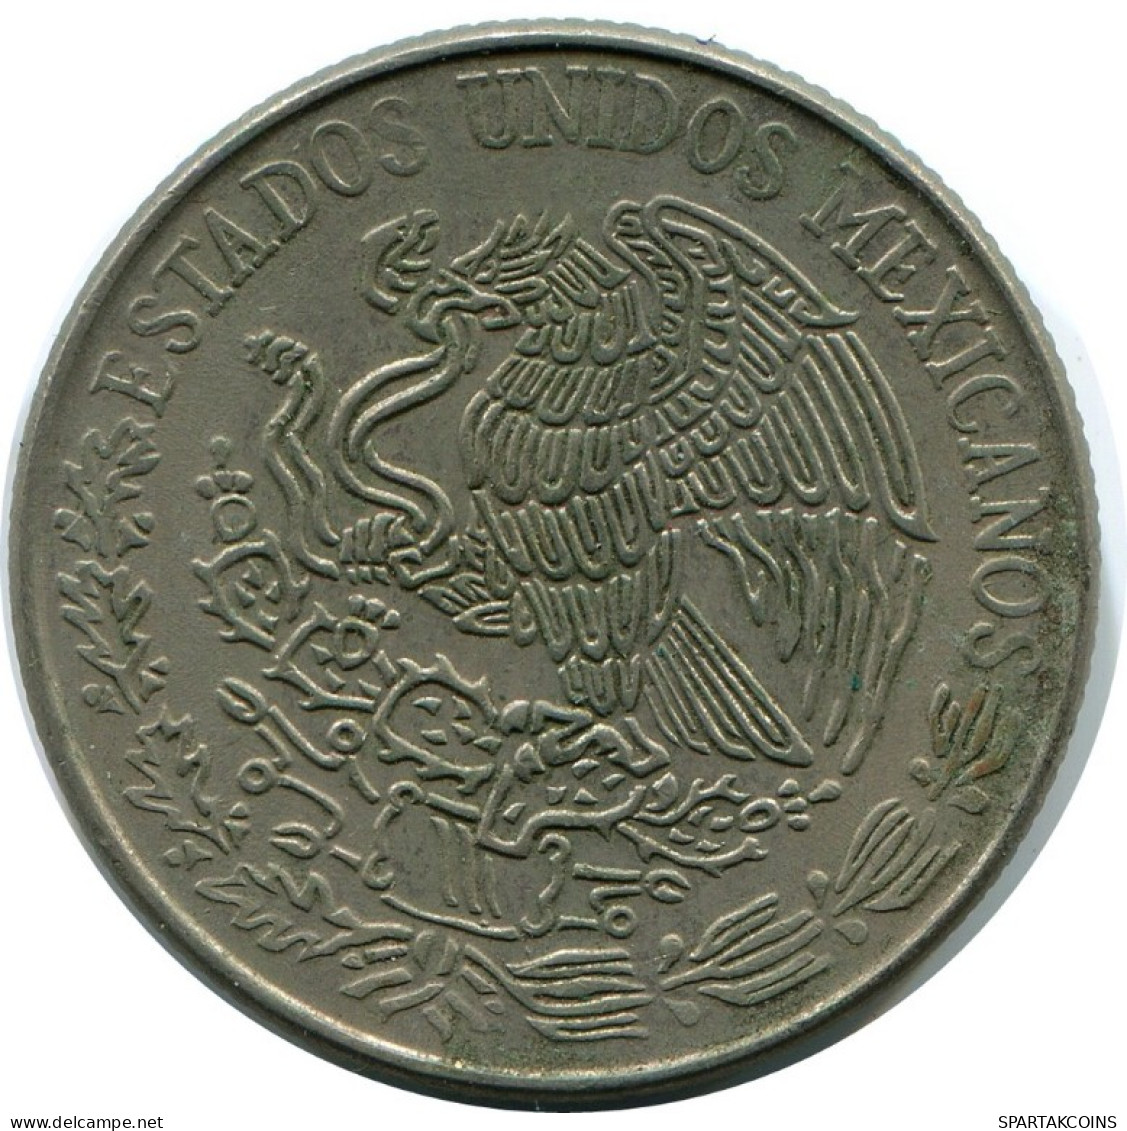 50 CENTAVOS 1976 MEXICO Moneda #AH484.5.E.A - Mexique